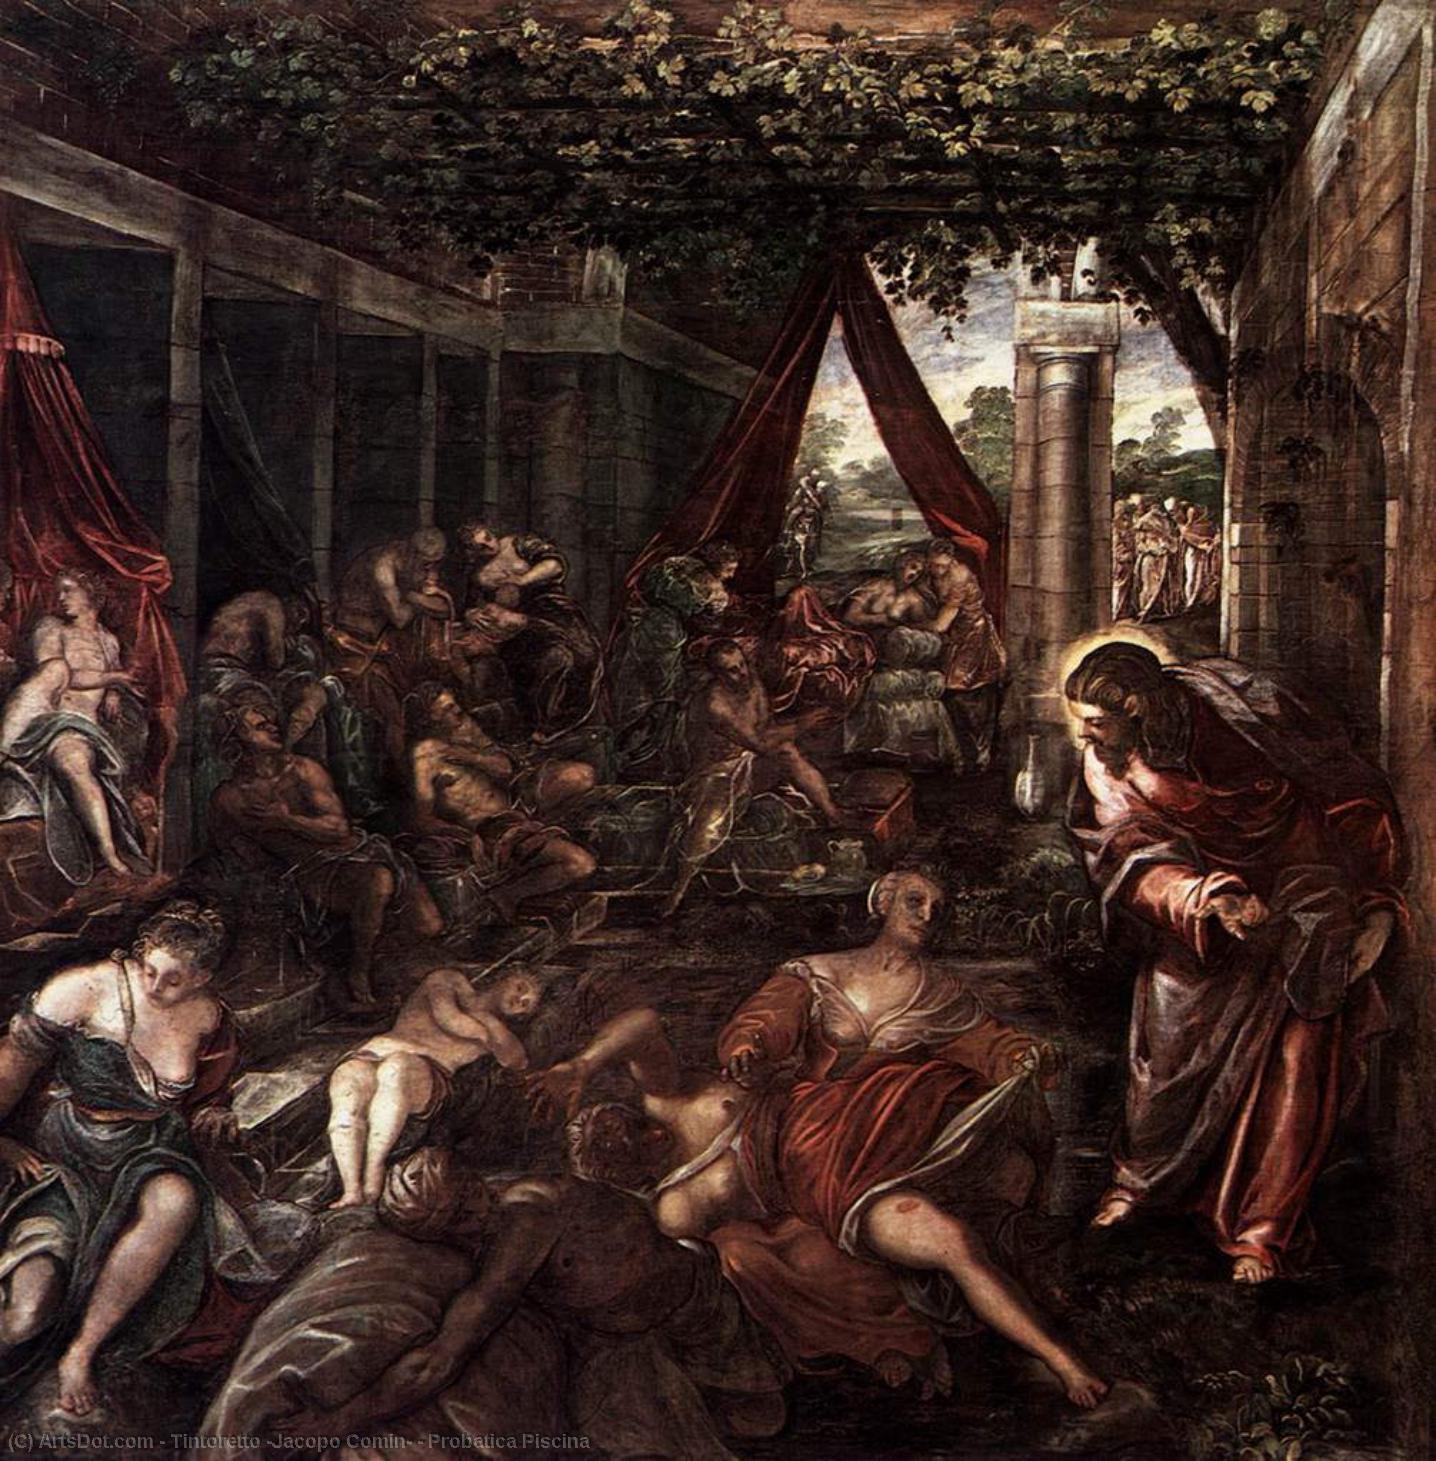 Kauf Museum Kunstreproduktionen Probatica Piscina, 1559 von Tintoretto (Jacopo Comin) (1518-1594, Italy) | ArtsDot.com